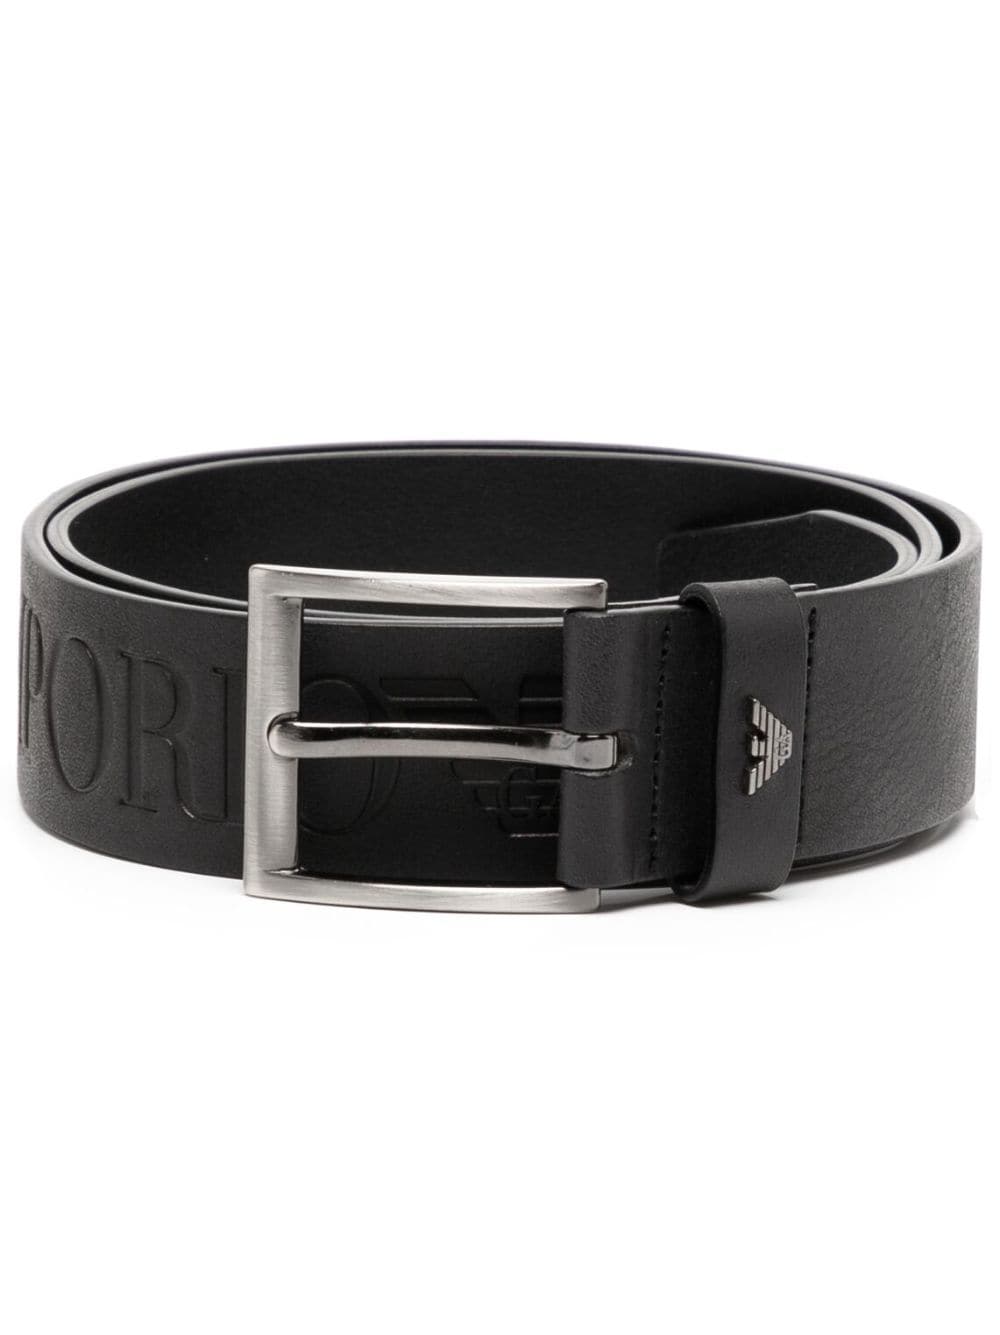 debossed-logo leather belt